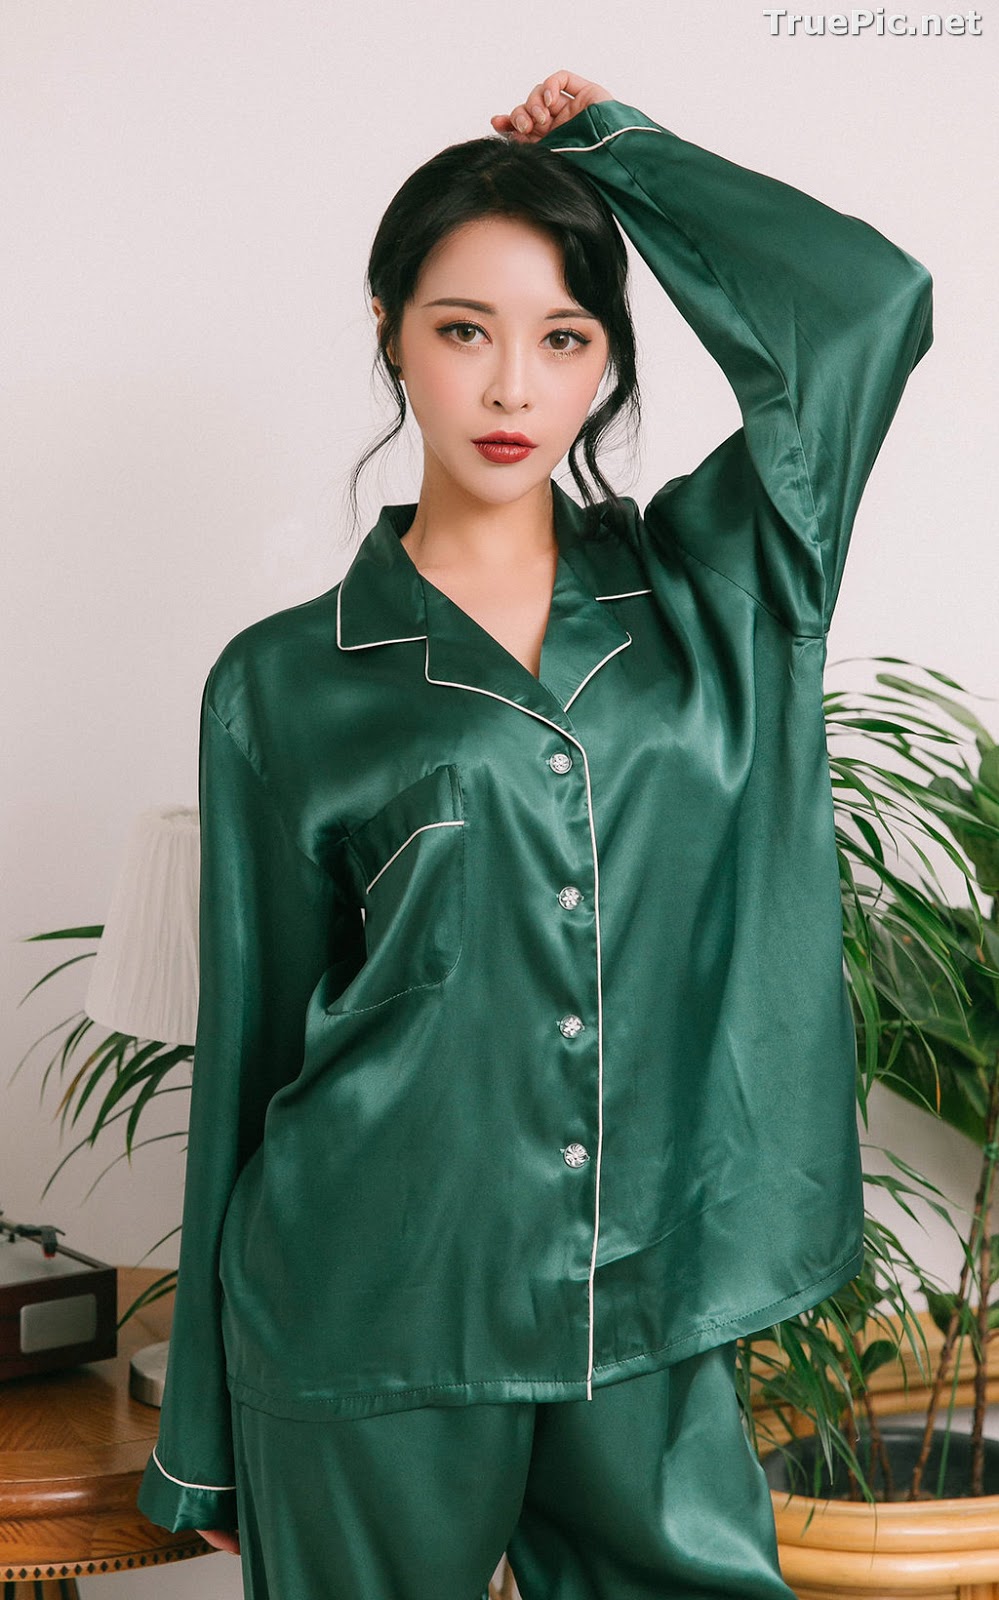 Image Ryu Hyeonju - Korean Fashion Model - Pijama and Lingerie Set - TruePic.net - Picture-13